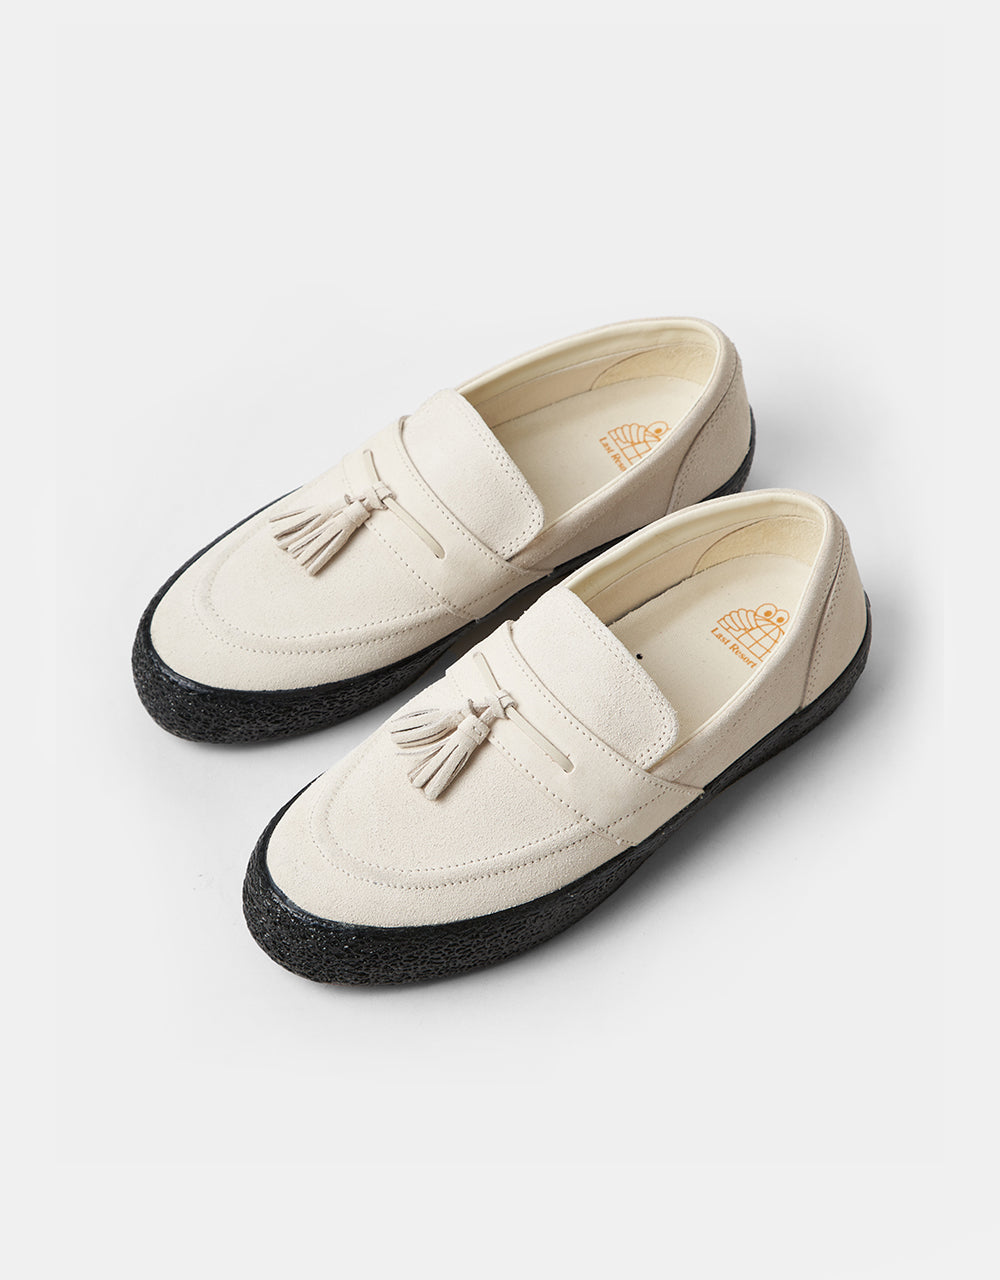 Last Resort AB VM005 Loafer Skate Shoes - Cream/Black